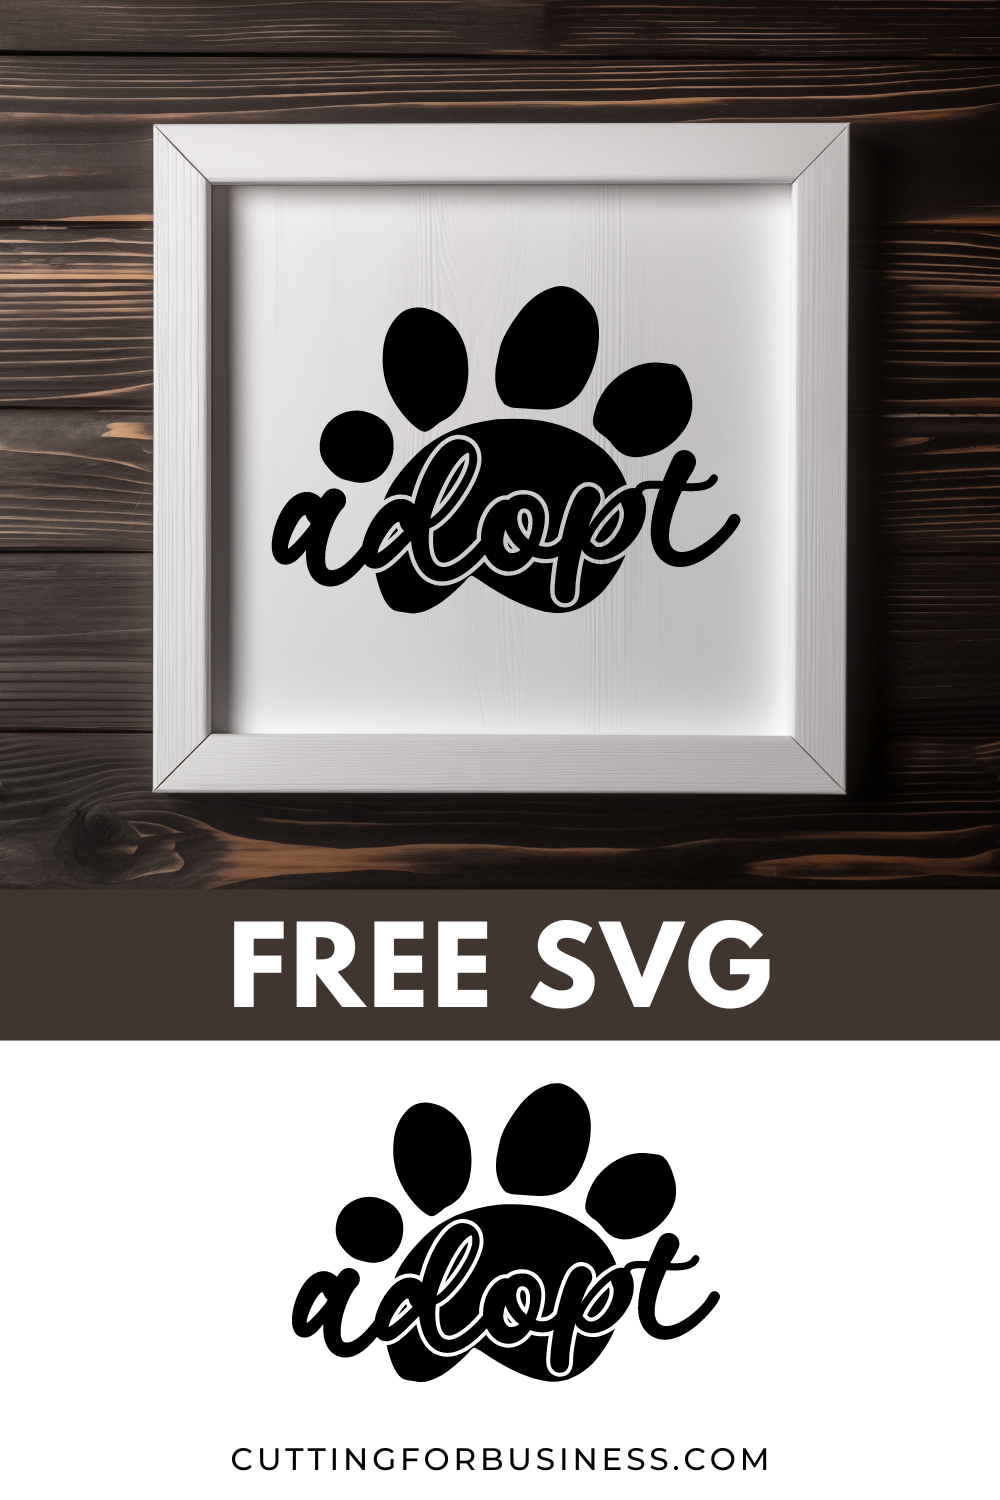 Free Pet Adoption SVG - cuttingforbusiness.com